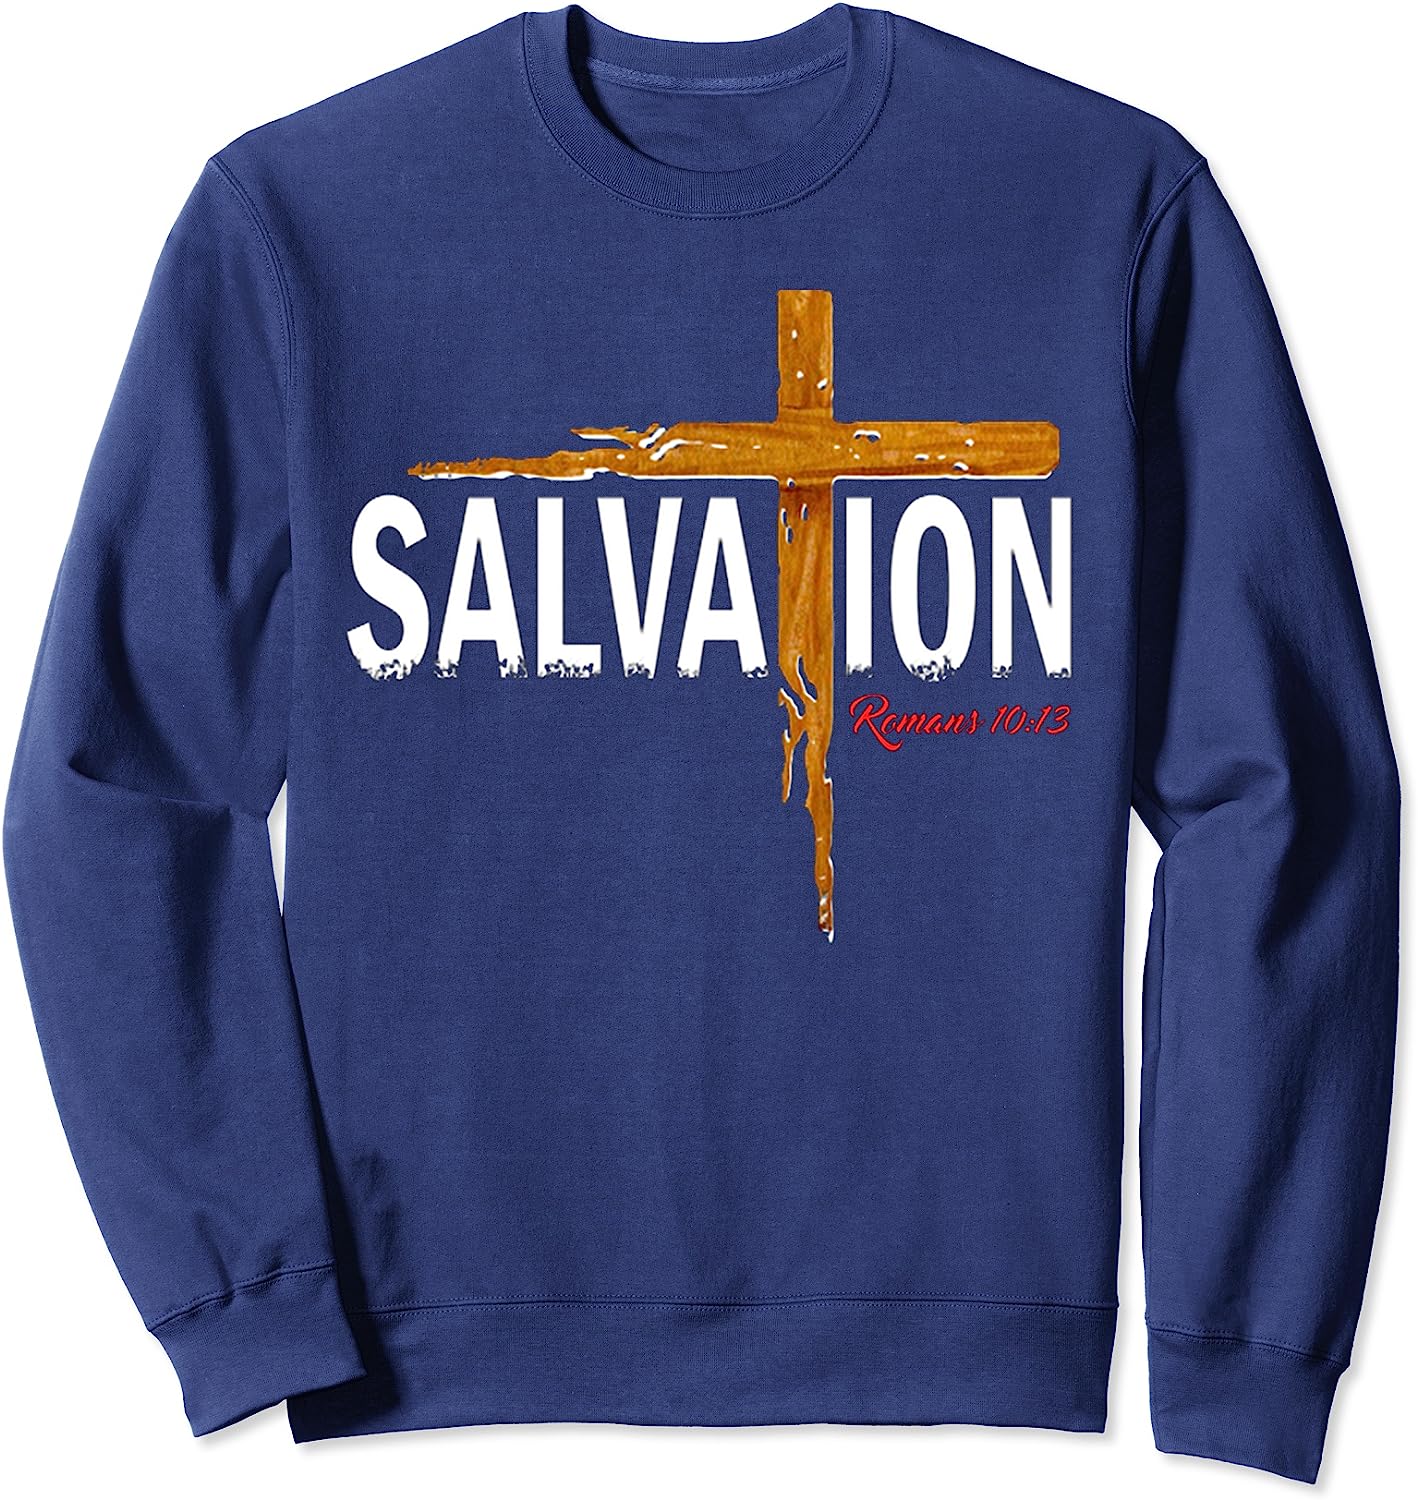 Salvation - Sweatshirt - Fun and Inspirational Design by Crucial Key